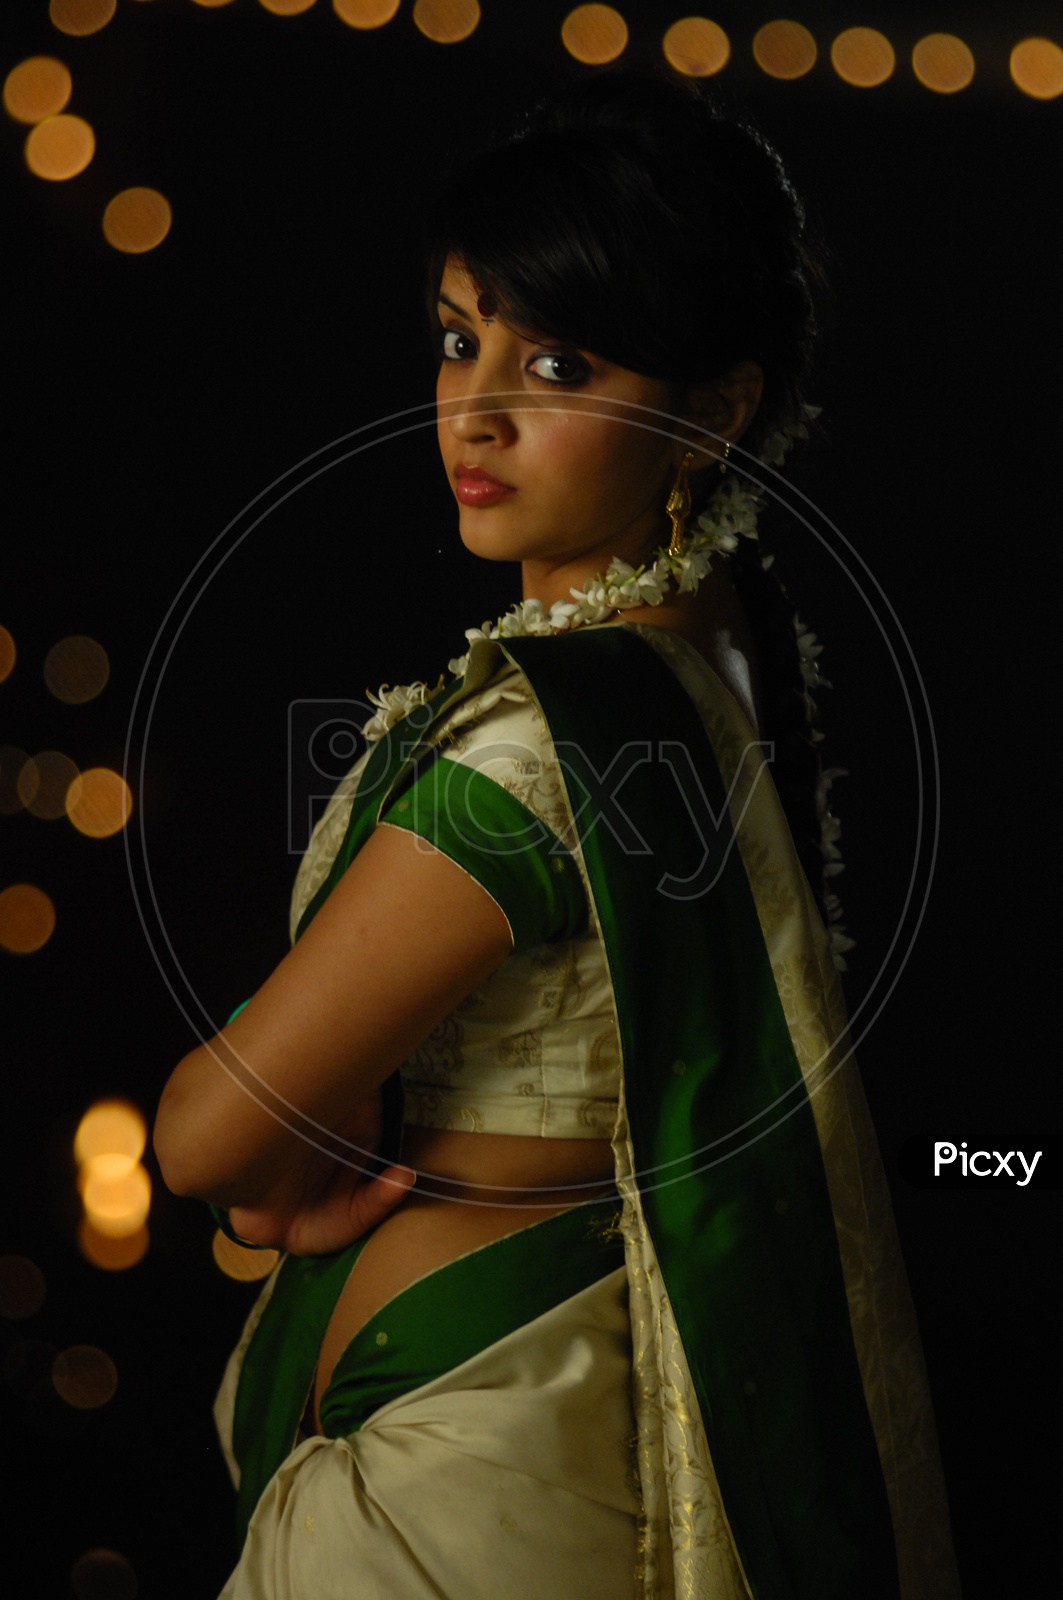 Closeup Shots Of an Indian Beautiful Women Wearing Jewellery and  Jasmine Flowers in Hair